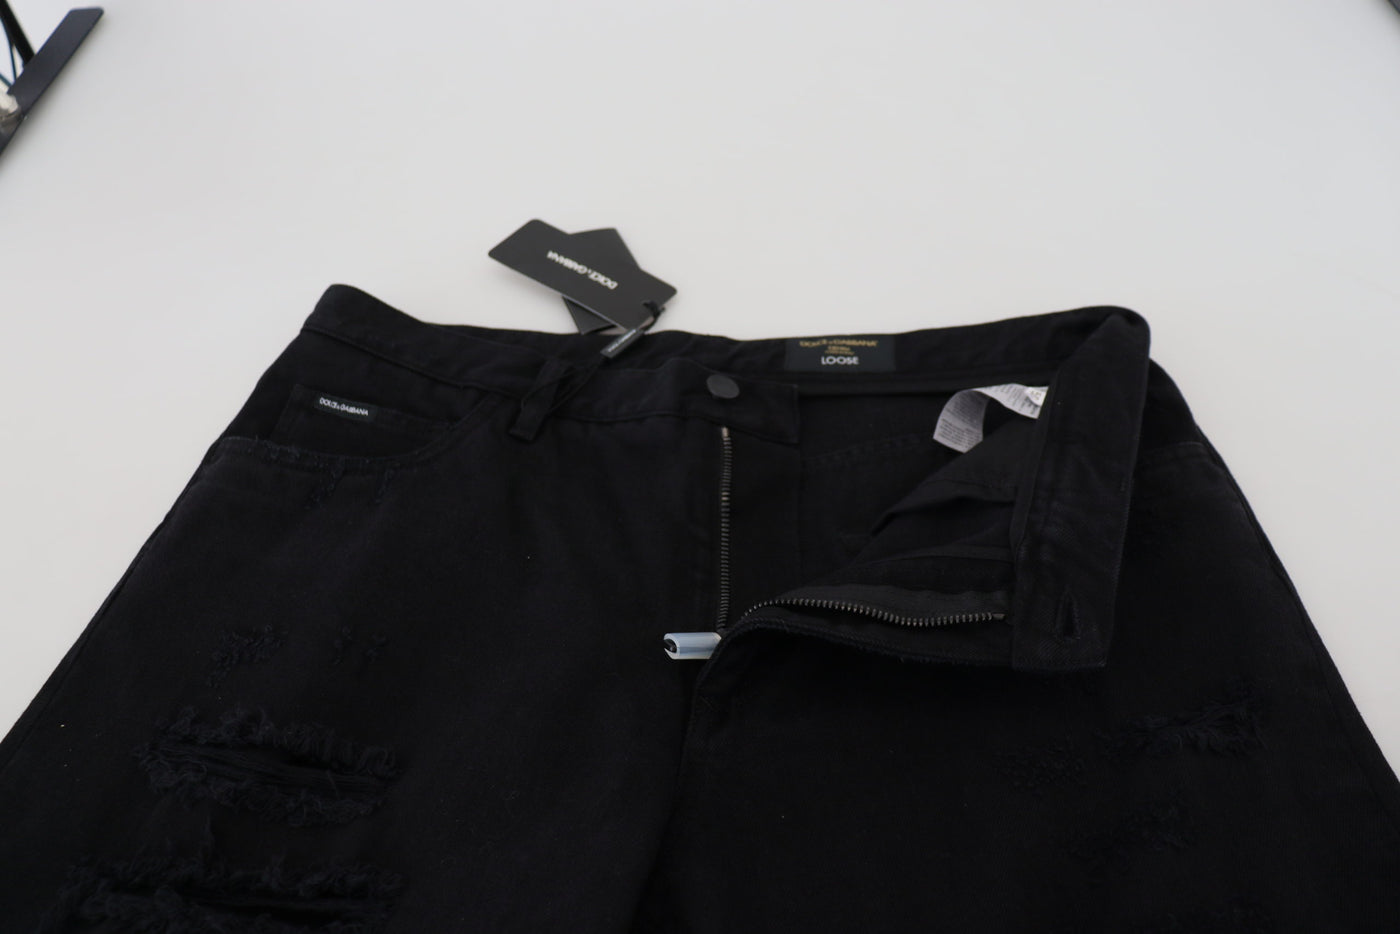 Dolce & Gabbana Black Loose Regular Torn Cotton Jeans